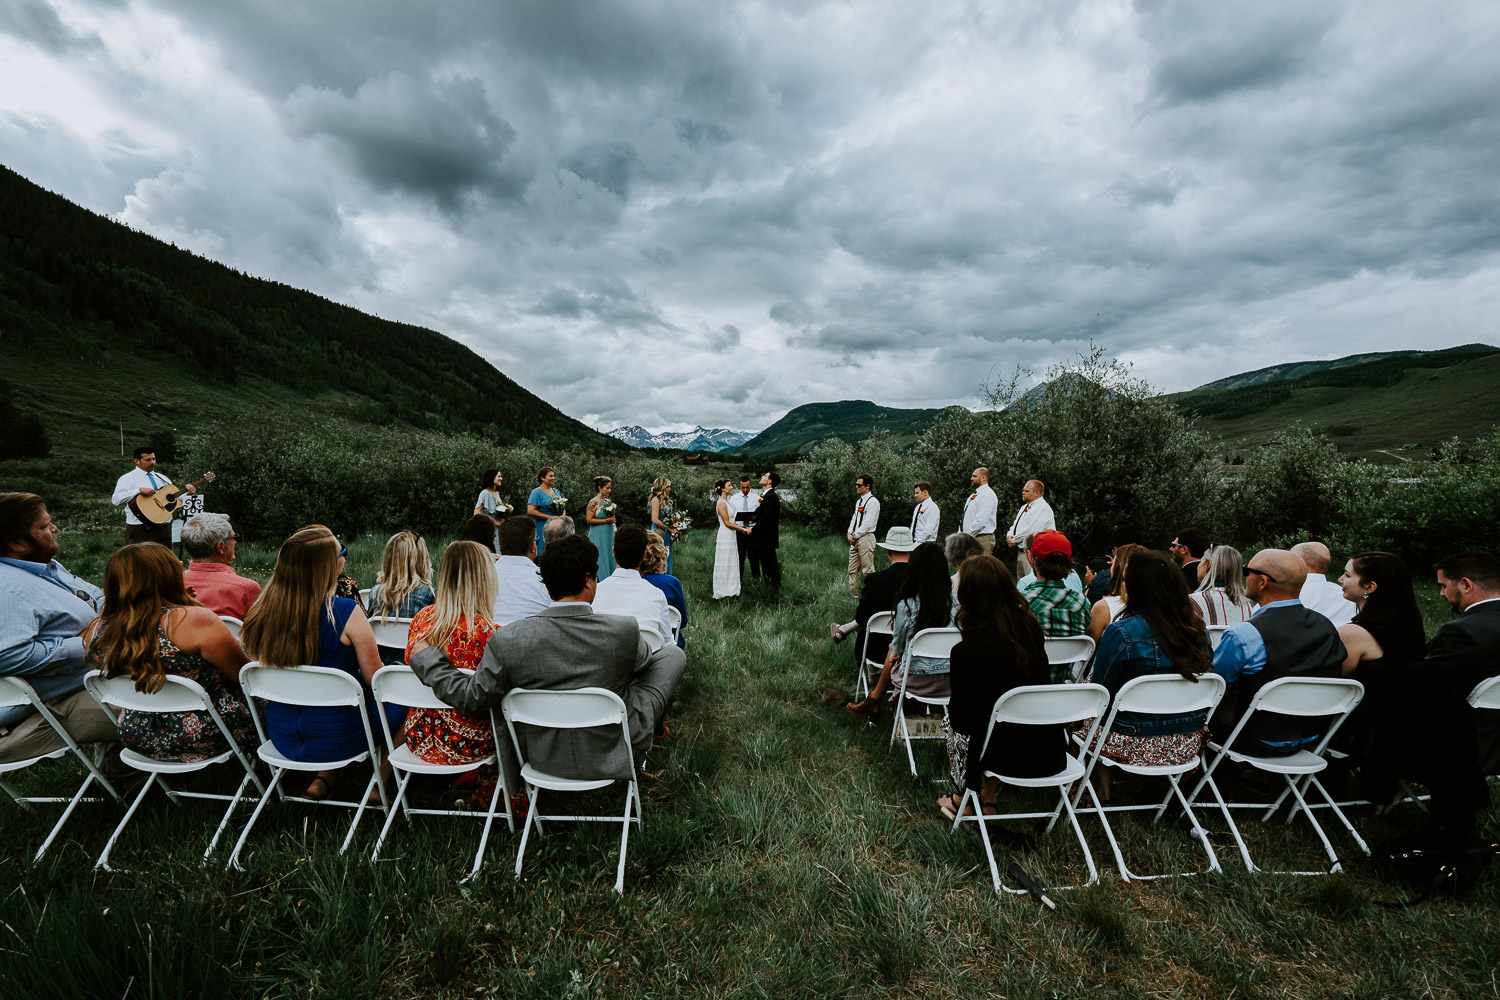 Colorado Wedding Photography, Intimate Wedding, Colorado elopement photography, crested butte wedding,